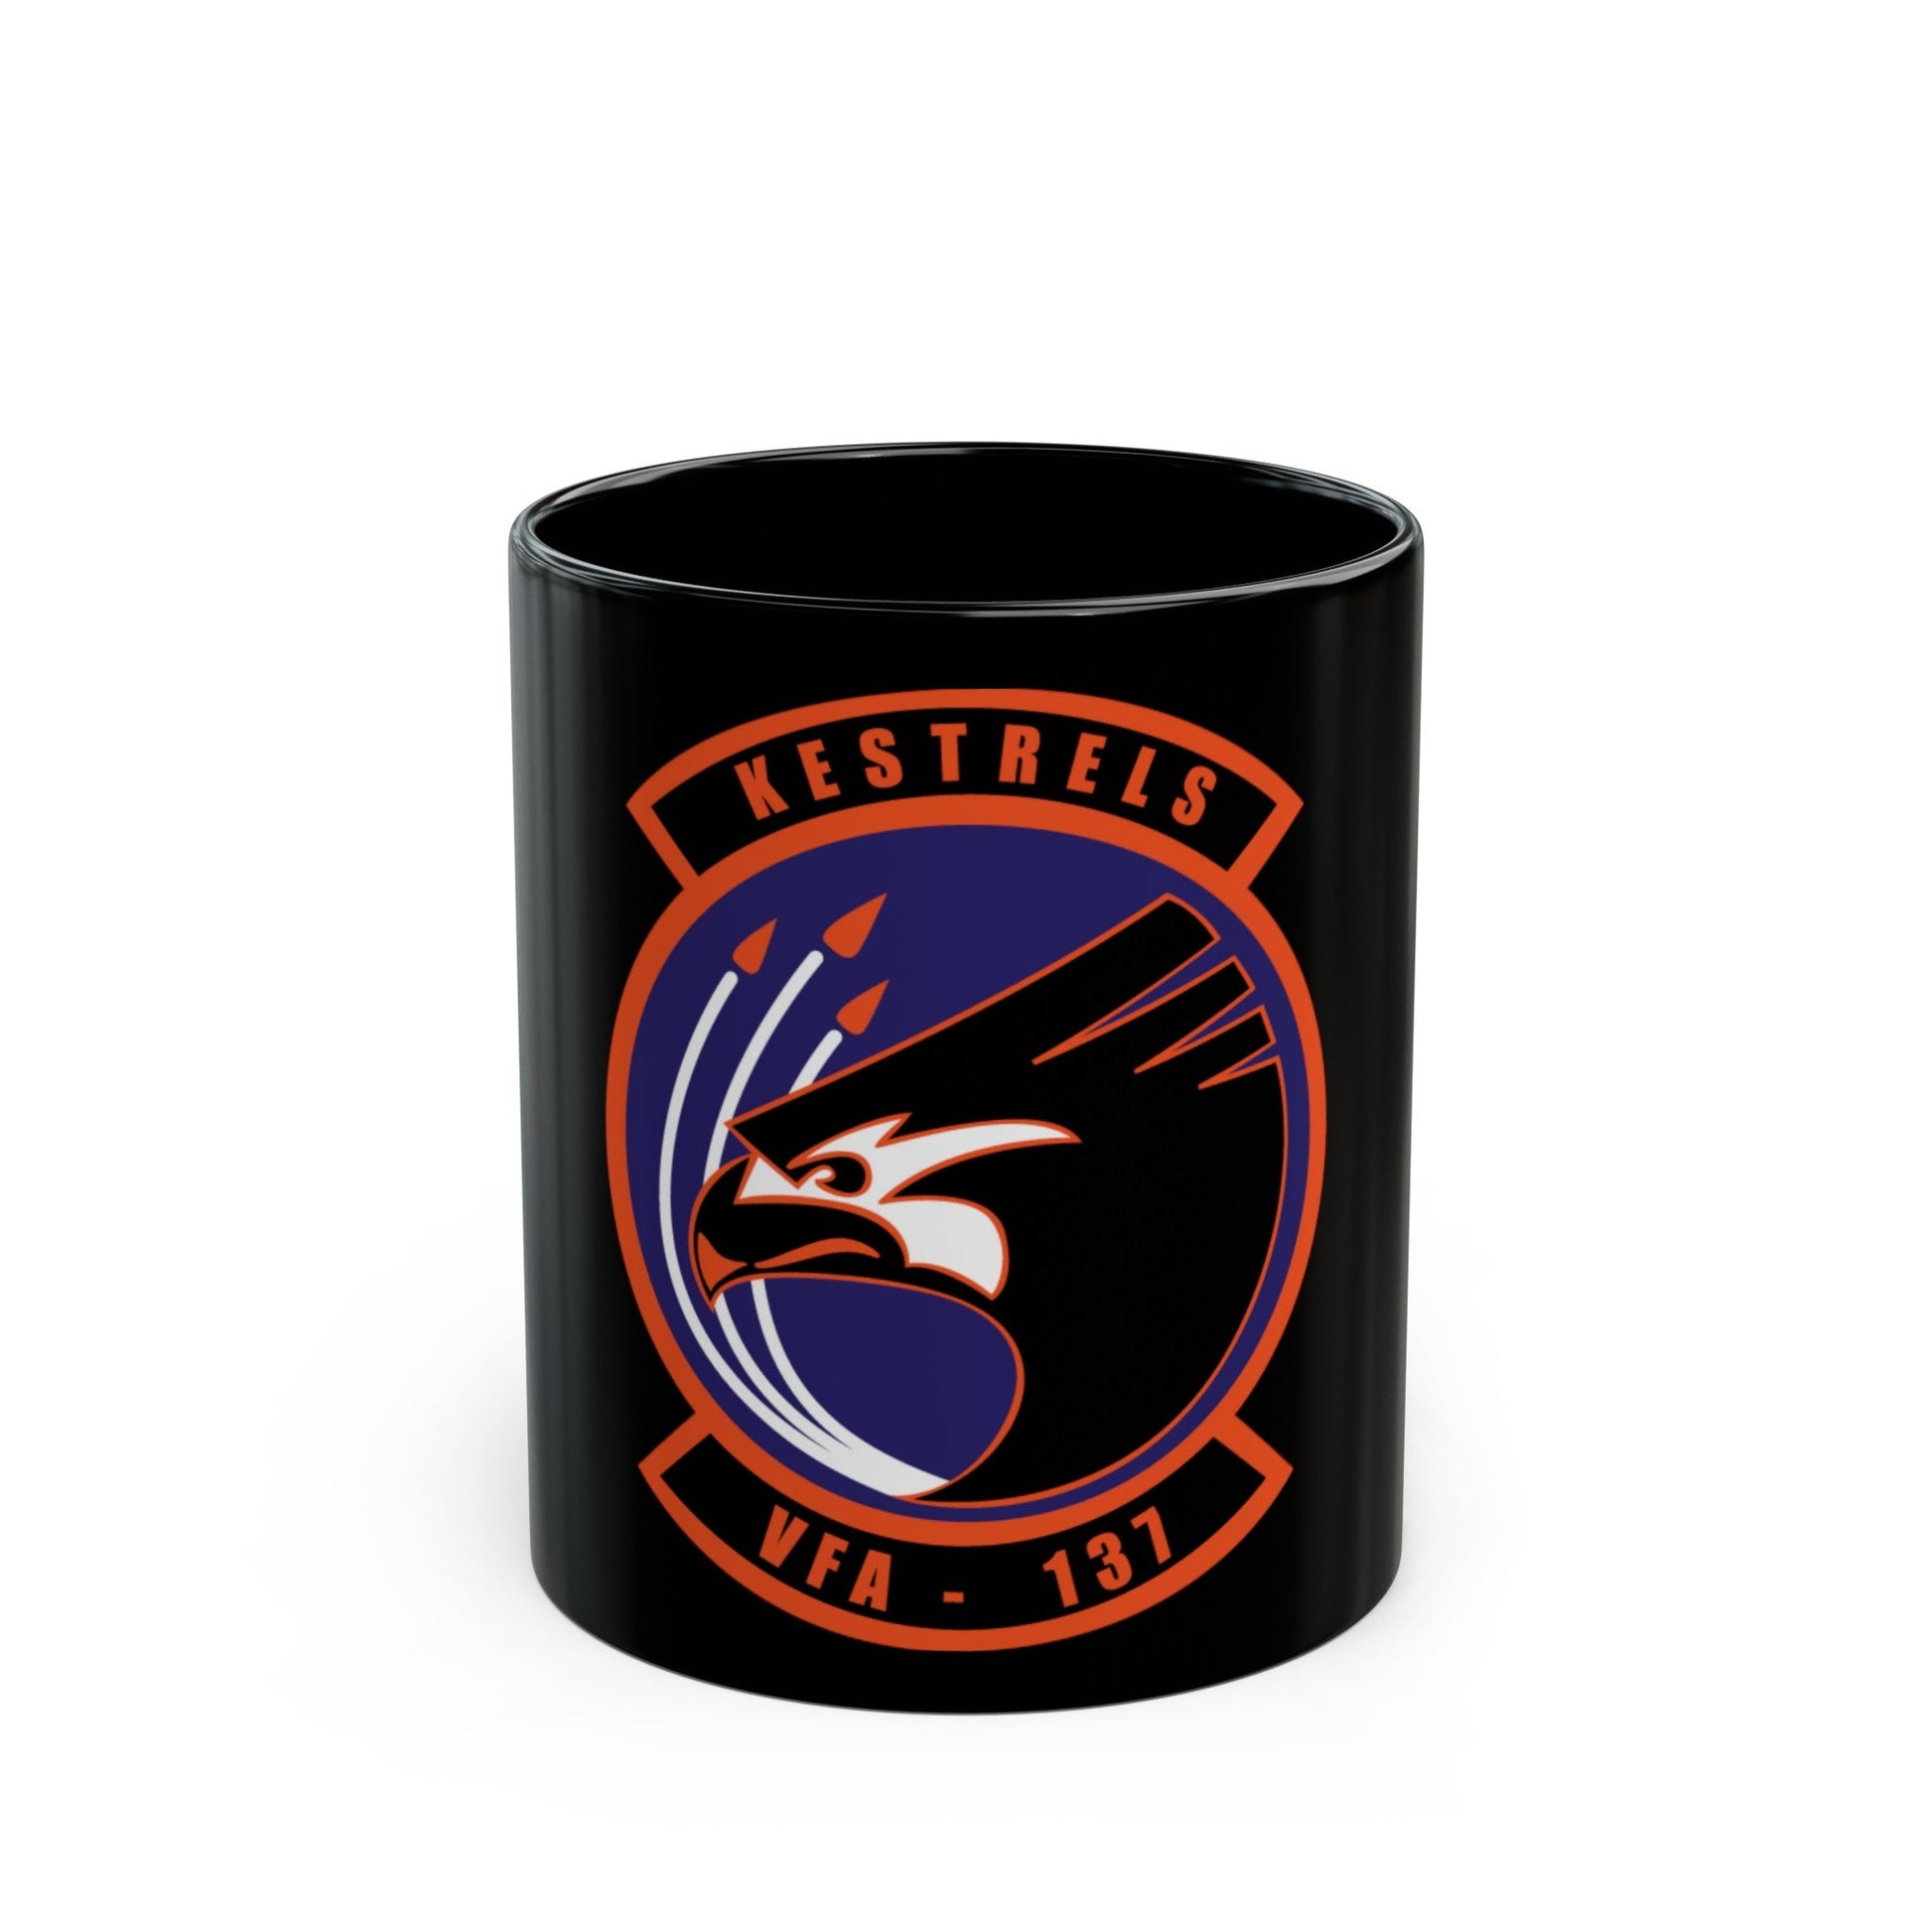 VFA 137 Kestrels 2018 (U.S. Navy) Black Coffee Mug-11oz-The Sticker Space